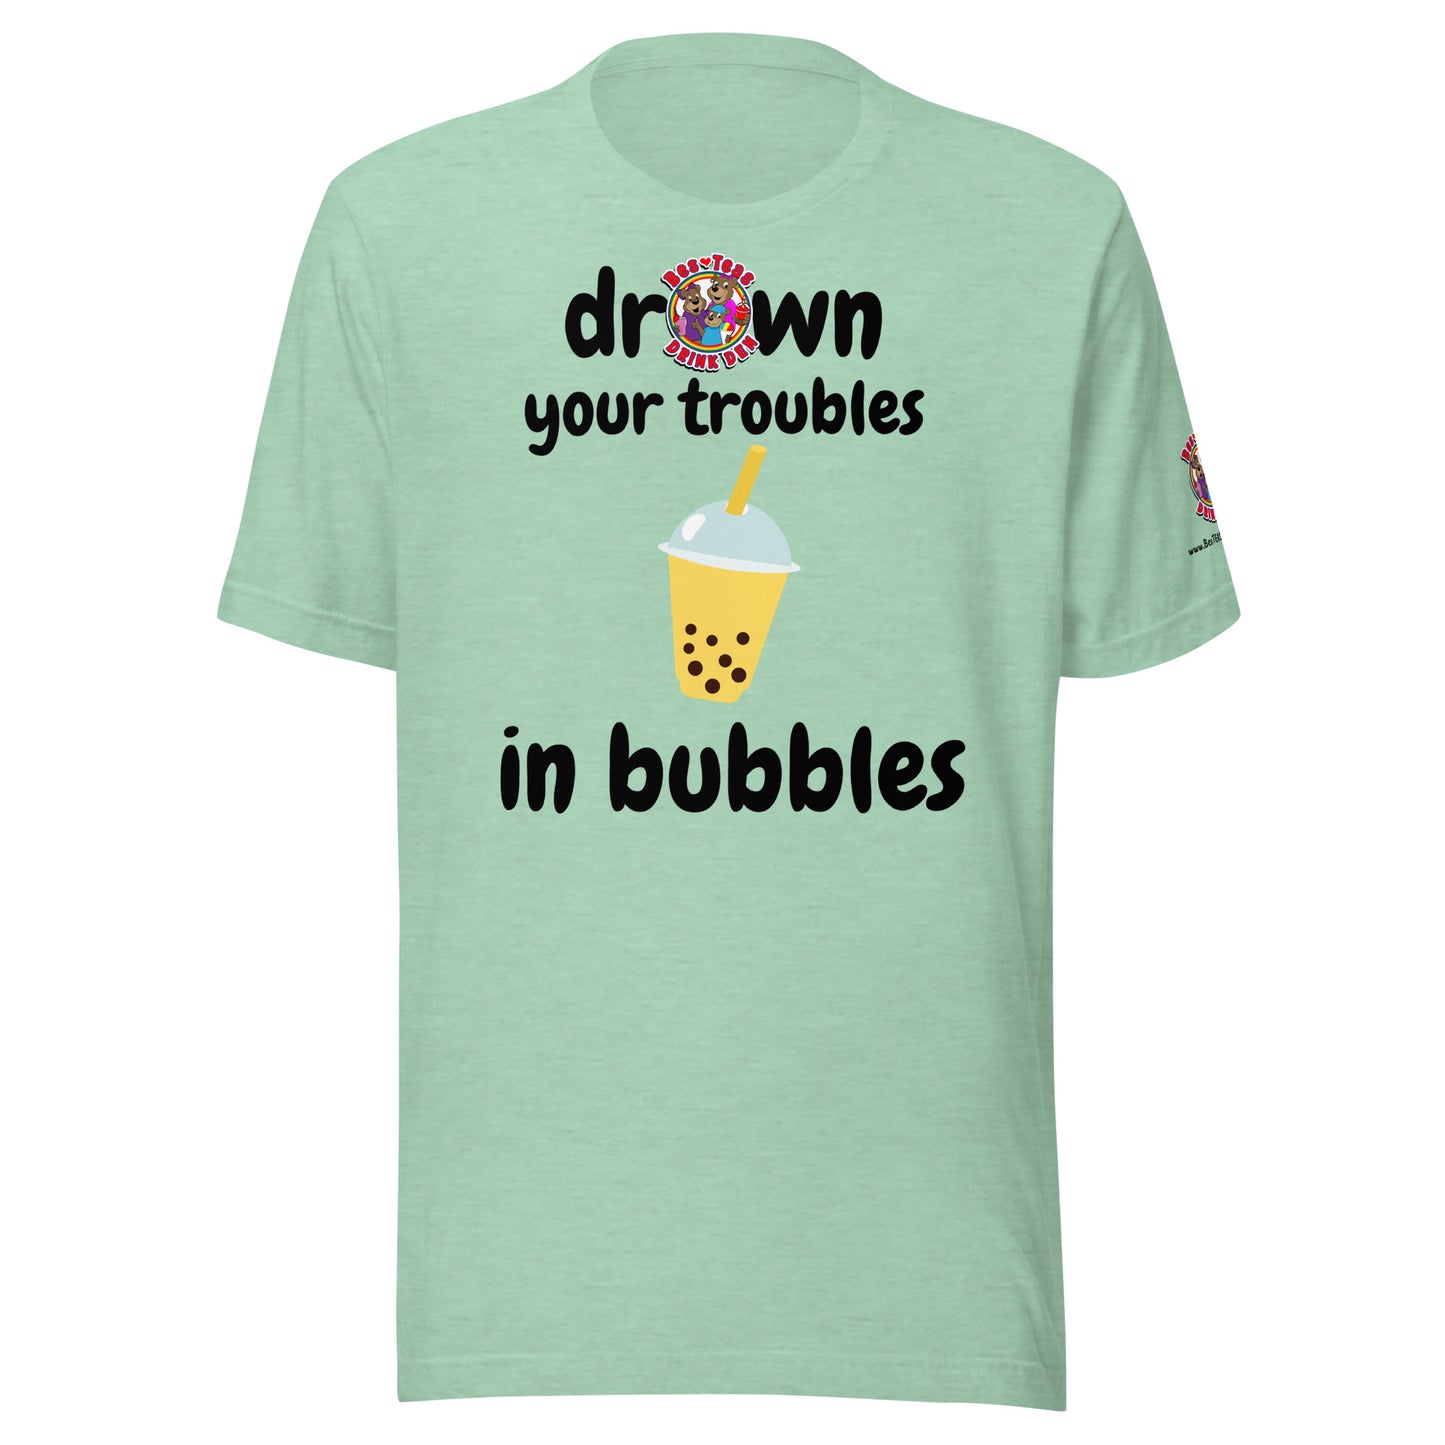 "Drown your troubles in bubbles" T Shirt